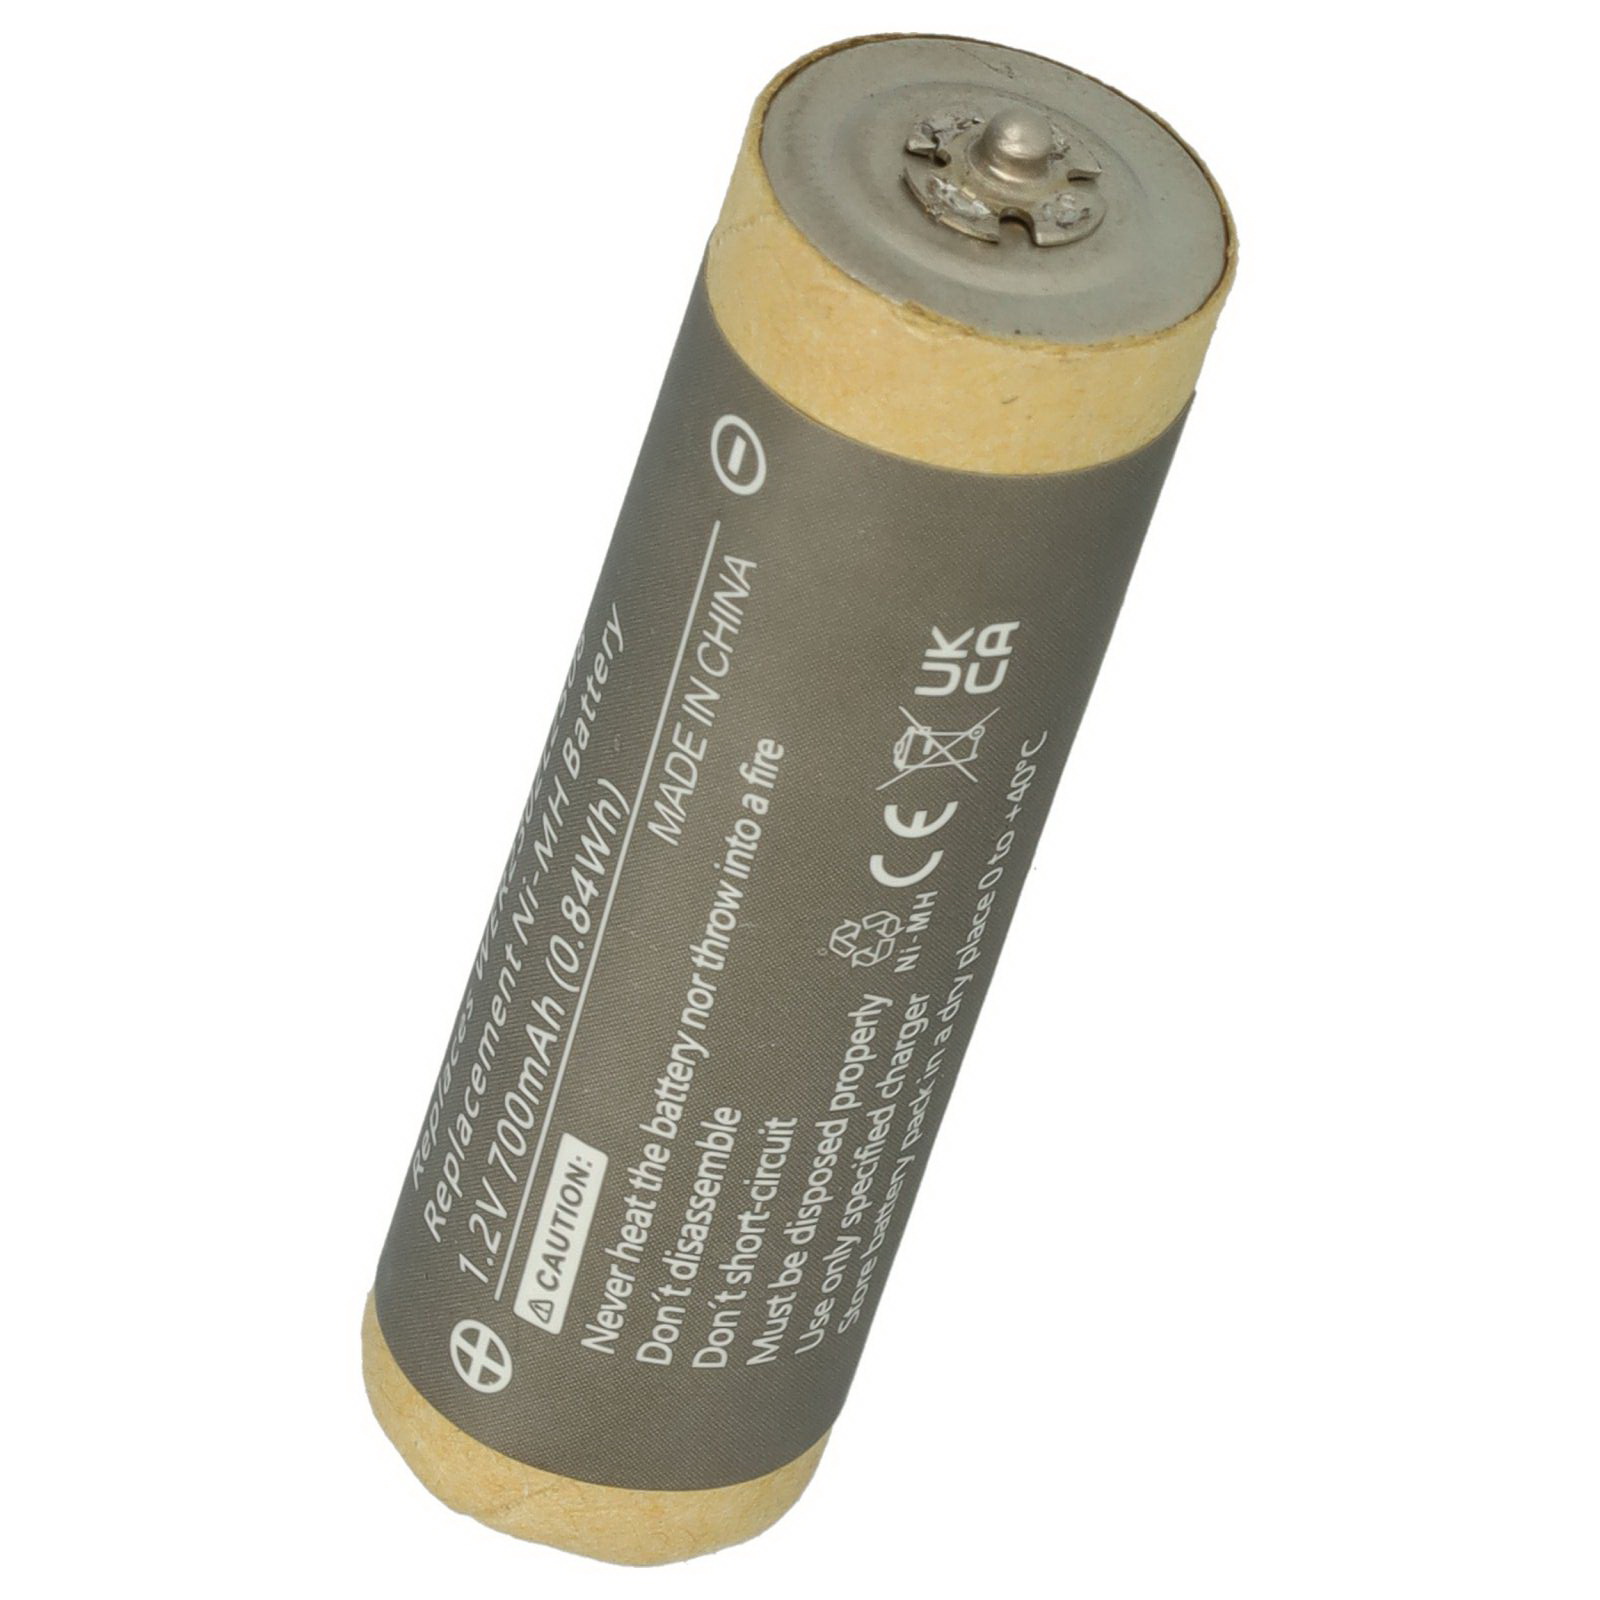 Batéria ako WER2302L2508 pre Panasonic ER2301 okrem iného 1,2V, Ni-MH, 700mAh